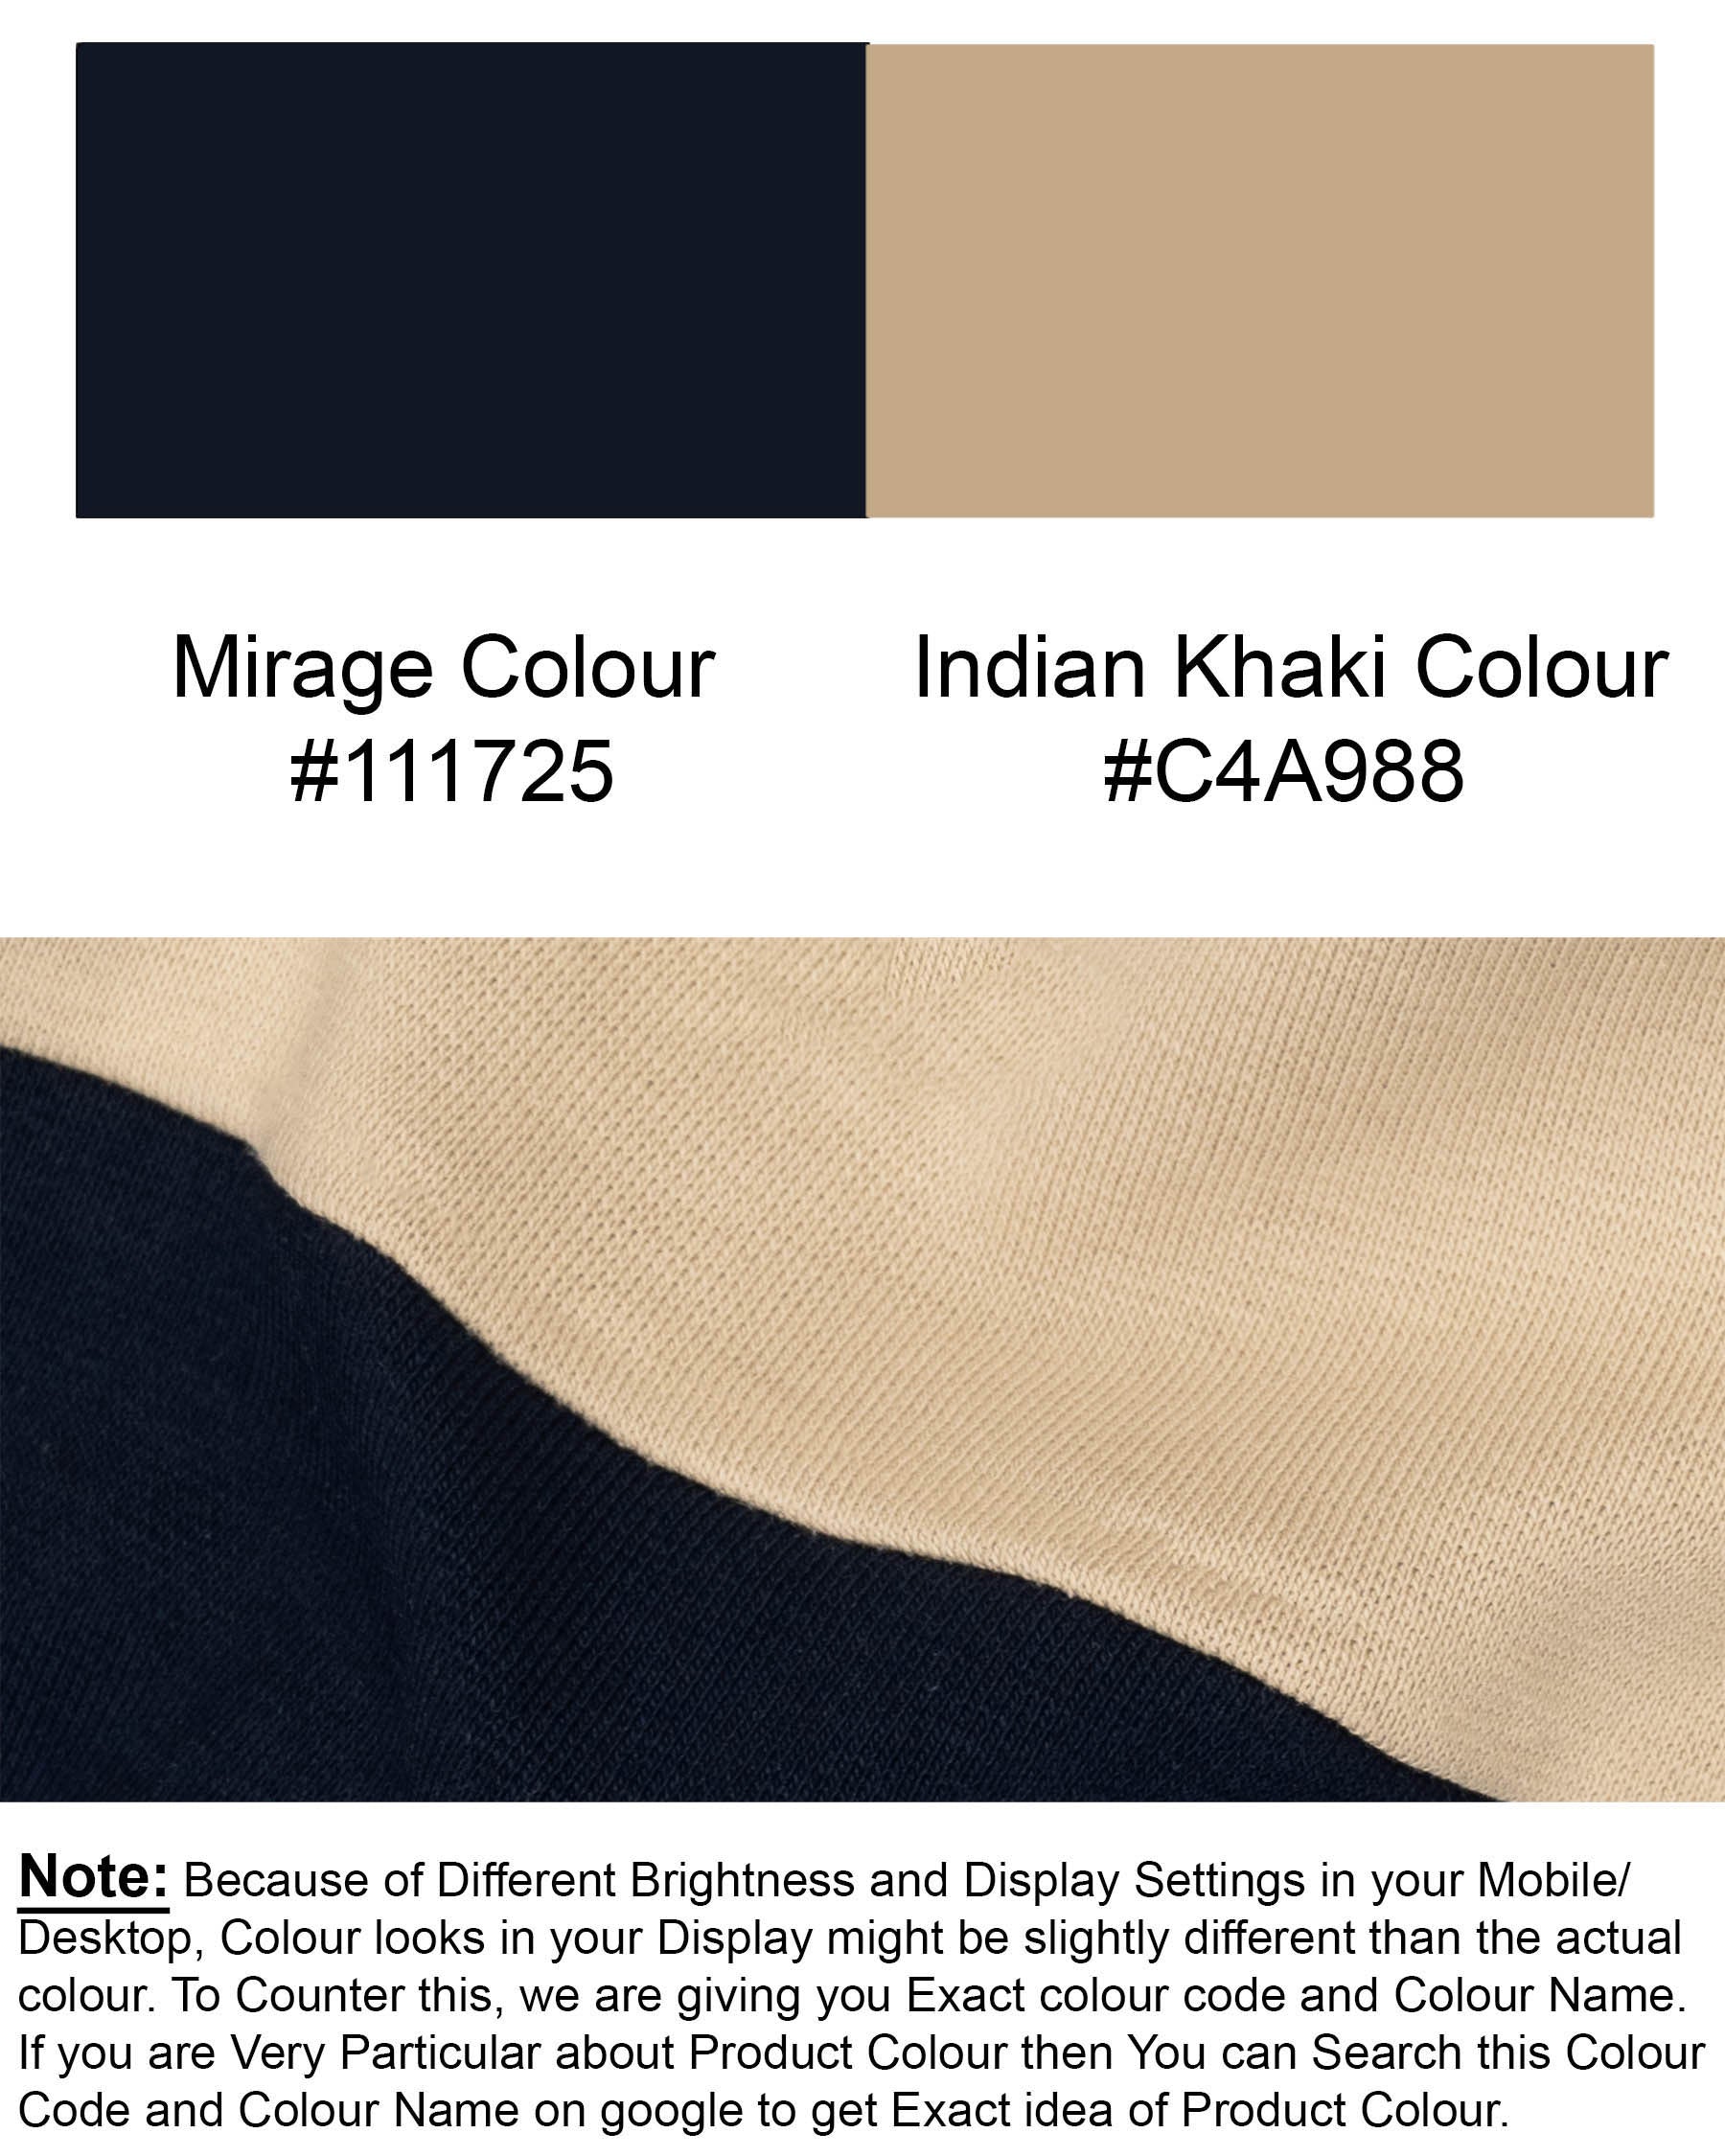 Indian Khaki and Mirage Blue Full Sleeve Premium Cotton Jersey Sweatshirt TS501-S, TS501-M, TS501-L, TS501-XL, TS501-XXL